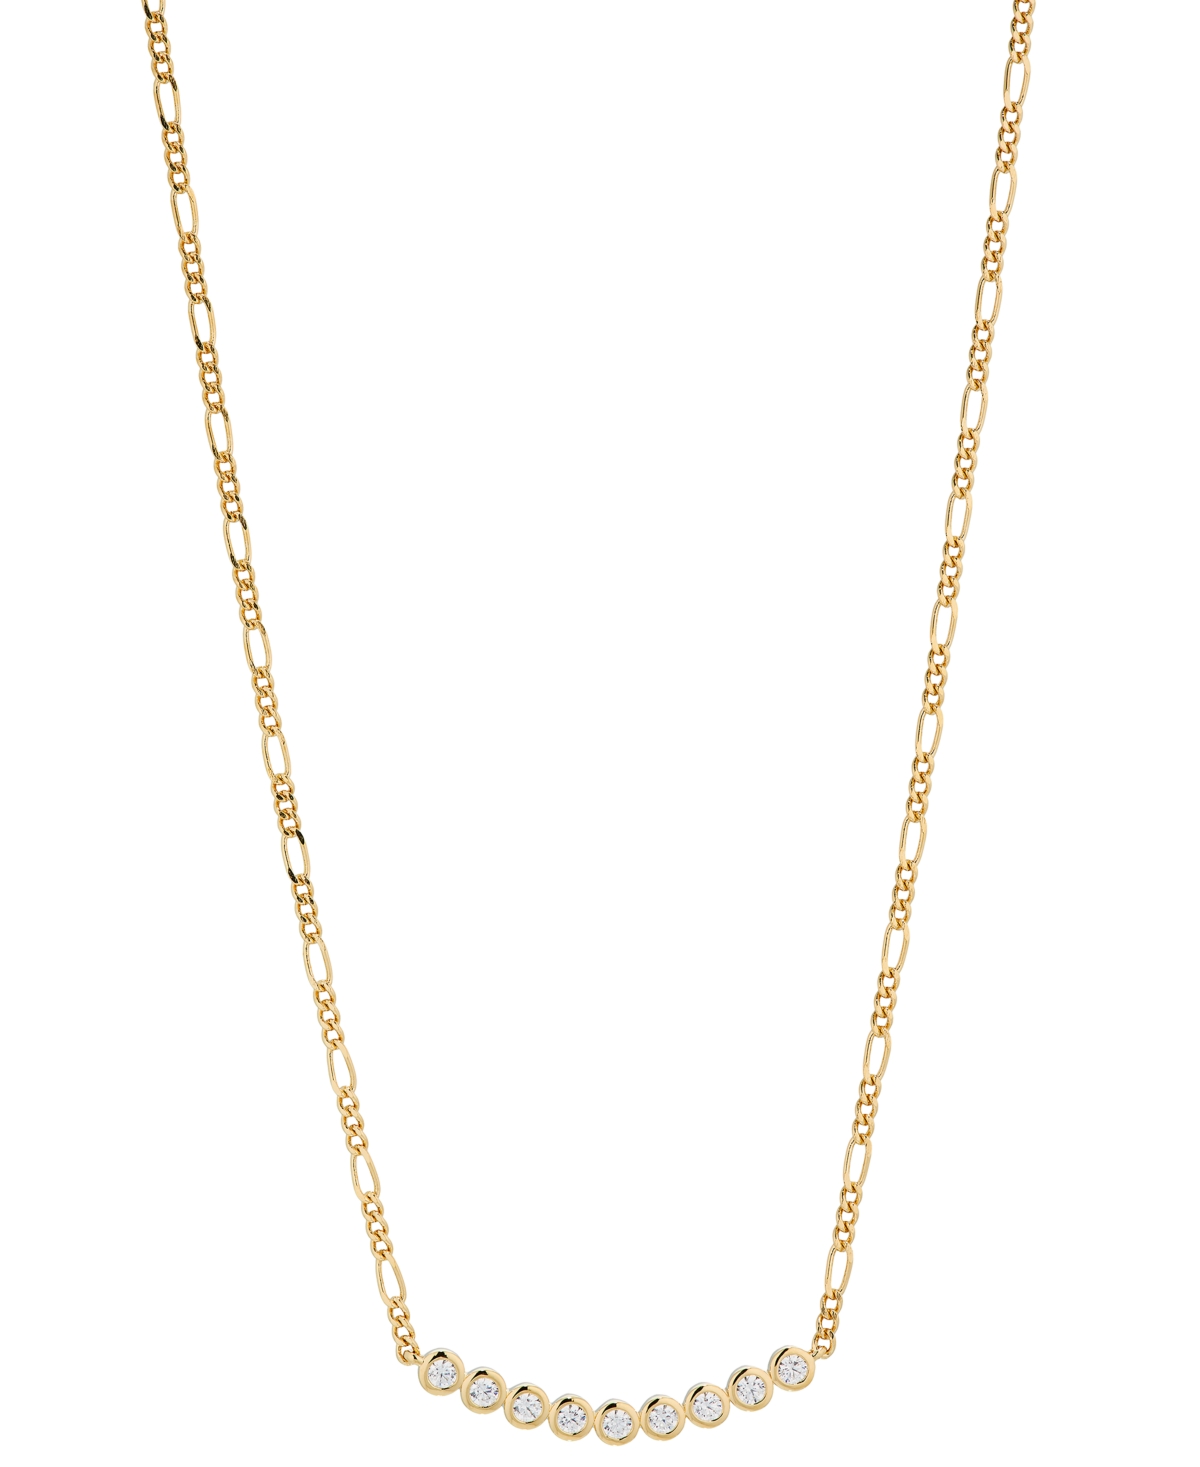 Ava Nadri 18k Gold-plated Cubic Zirconia Statement Necklace, 16" + 2" Extender